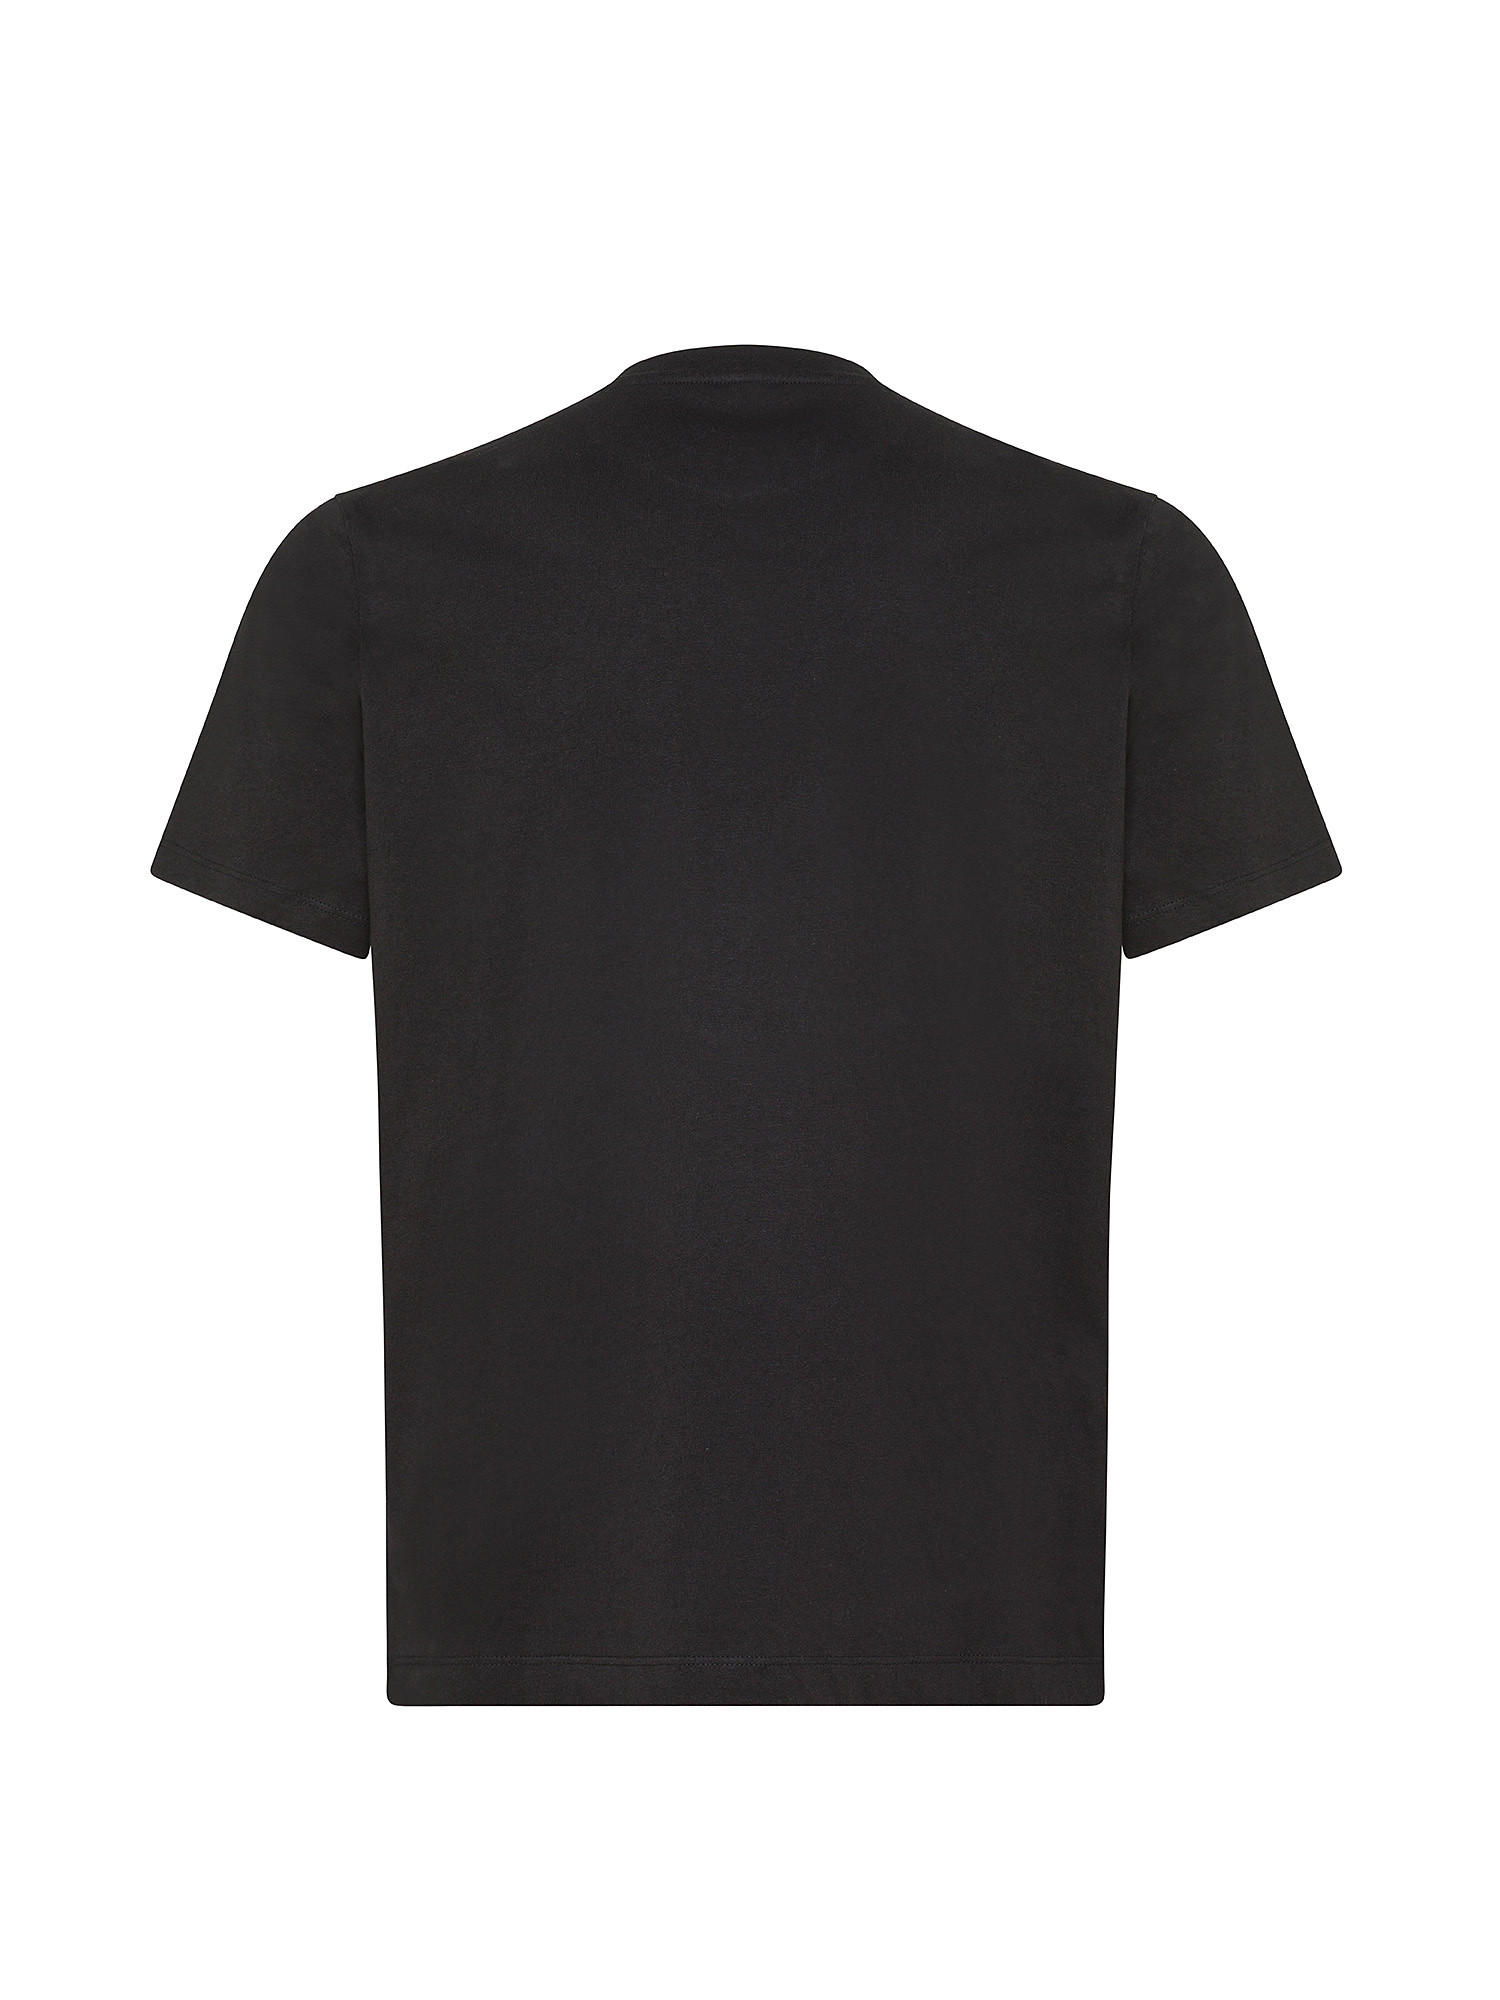 North Sails - T-shirt in jersey di cotone organico con micrologo, Nero, large image number 1